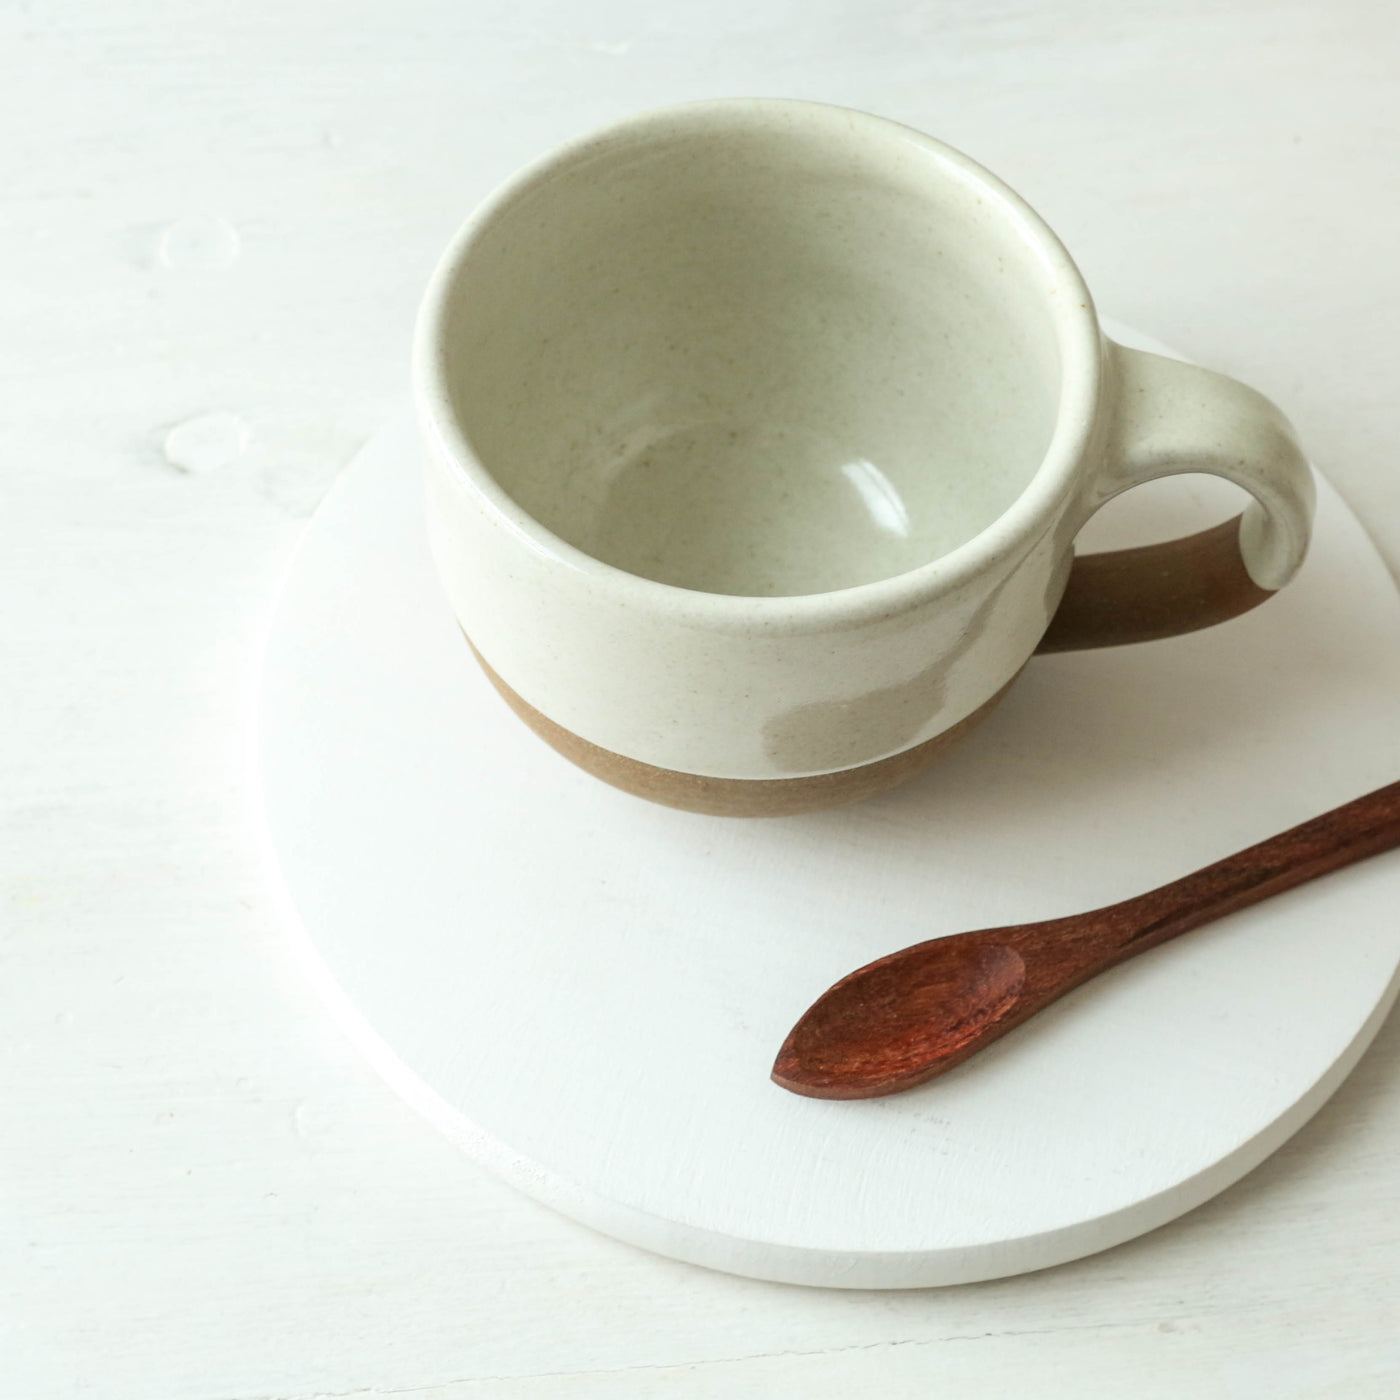 Mali Coffee Mug